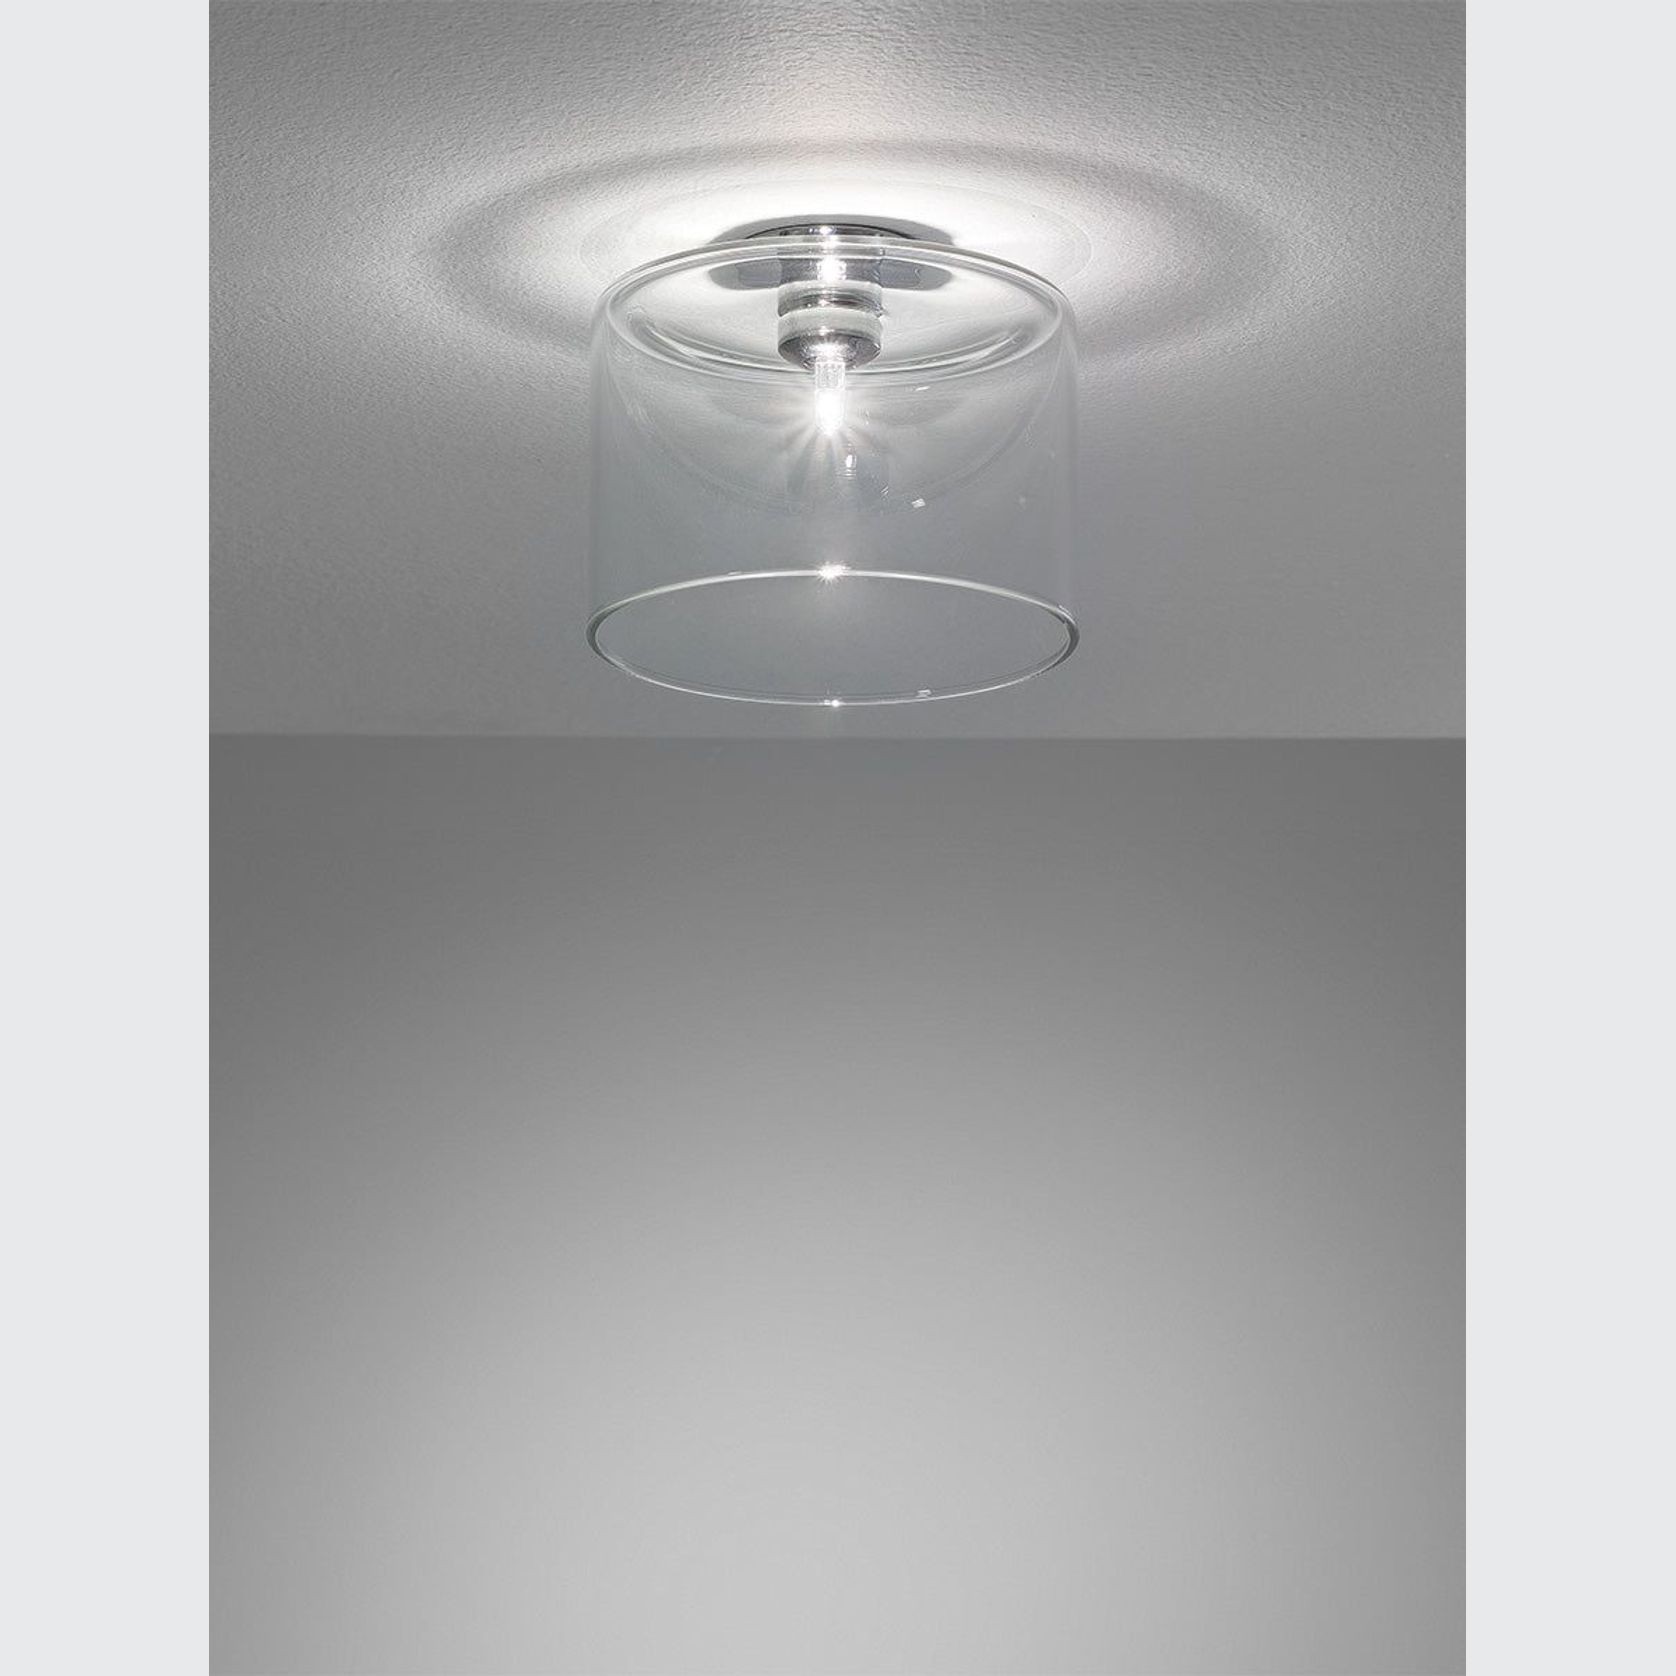 Spillray Ceiling Light gallery detail image